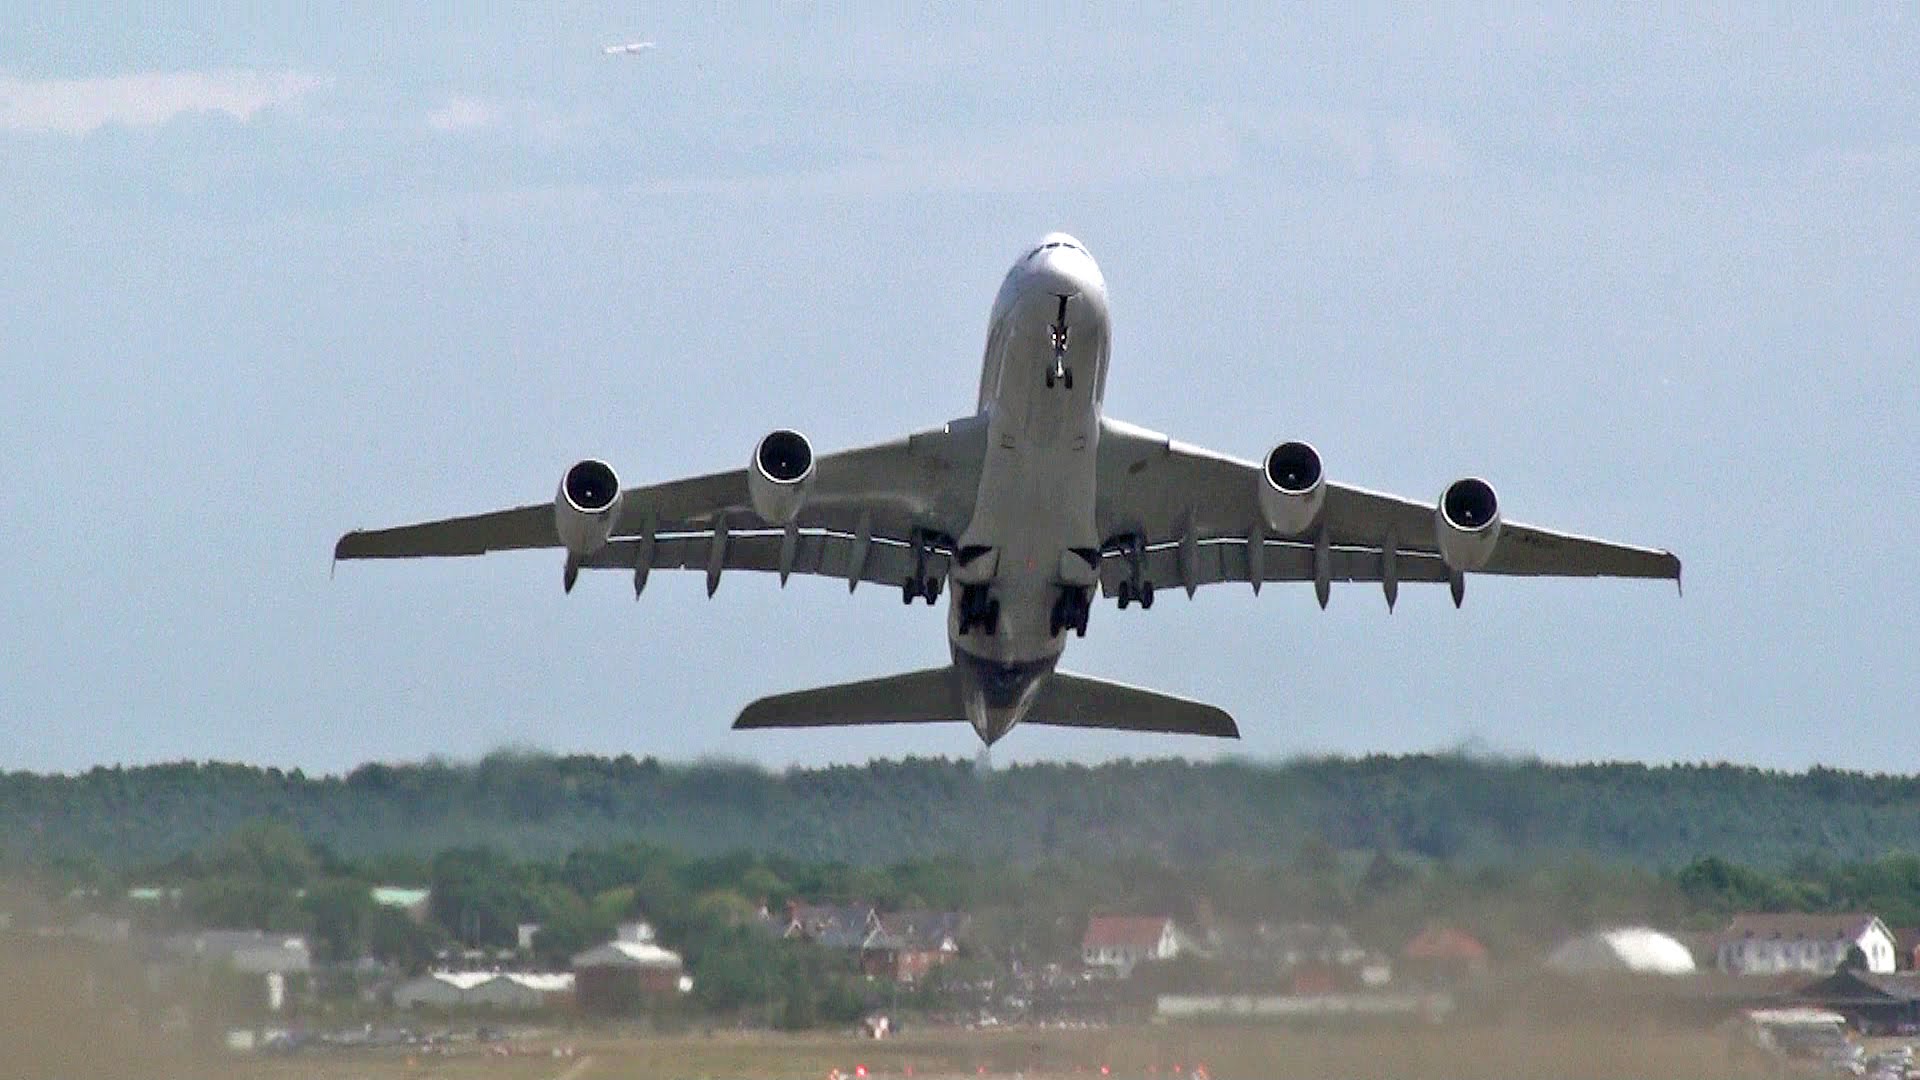 Jetliner taking-off photo